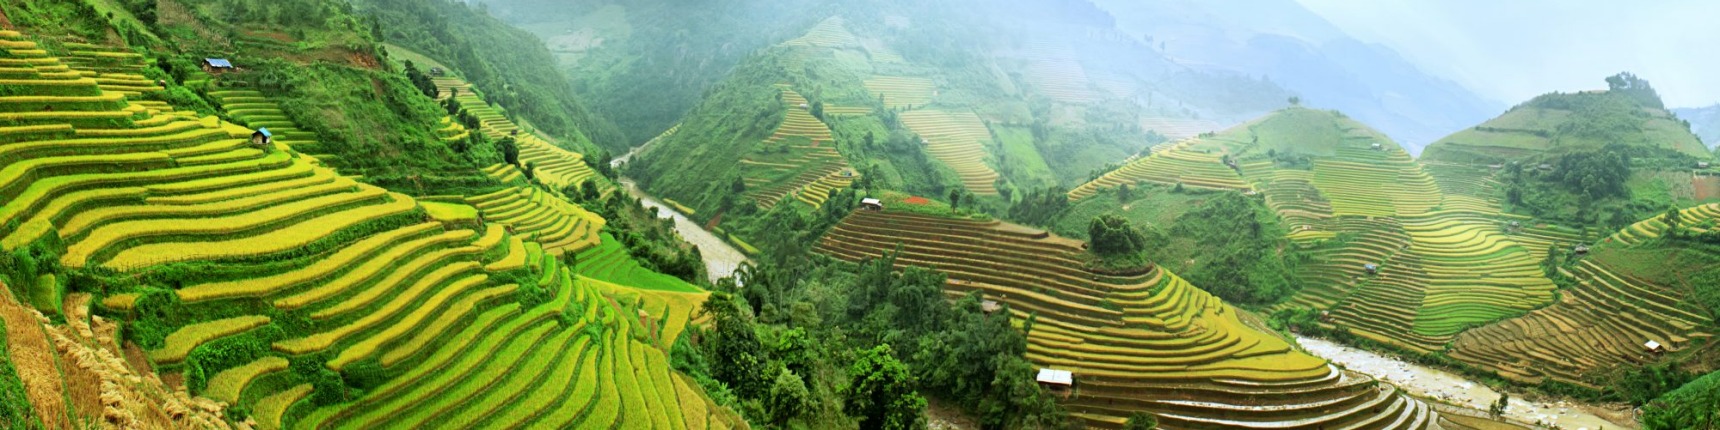 southeast asia rice fields